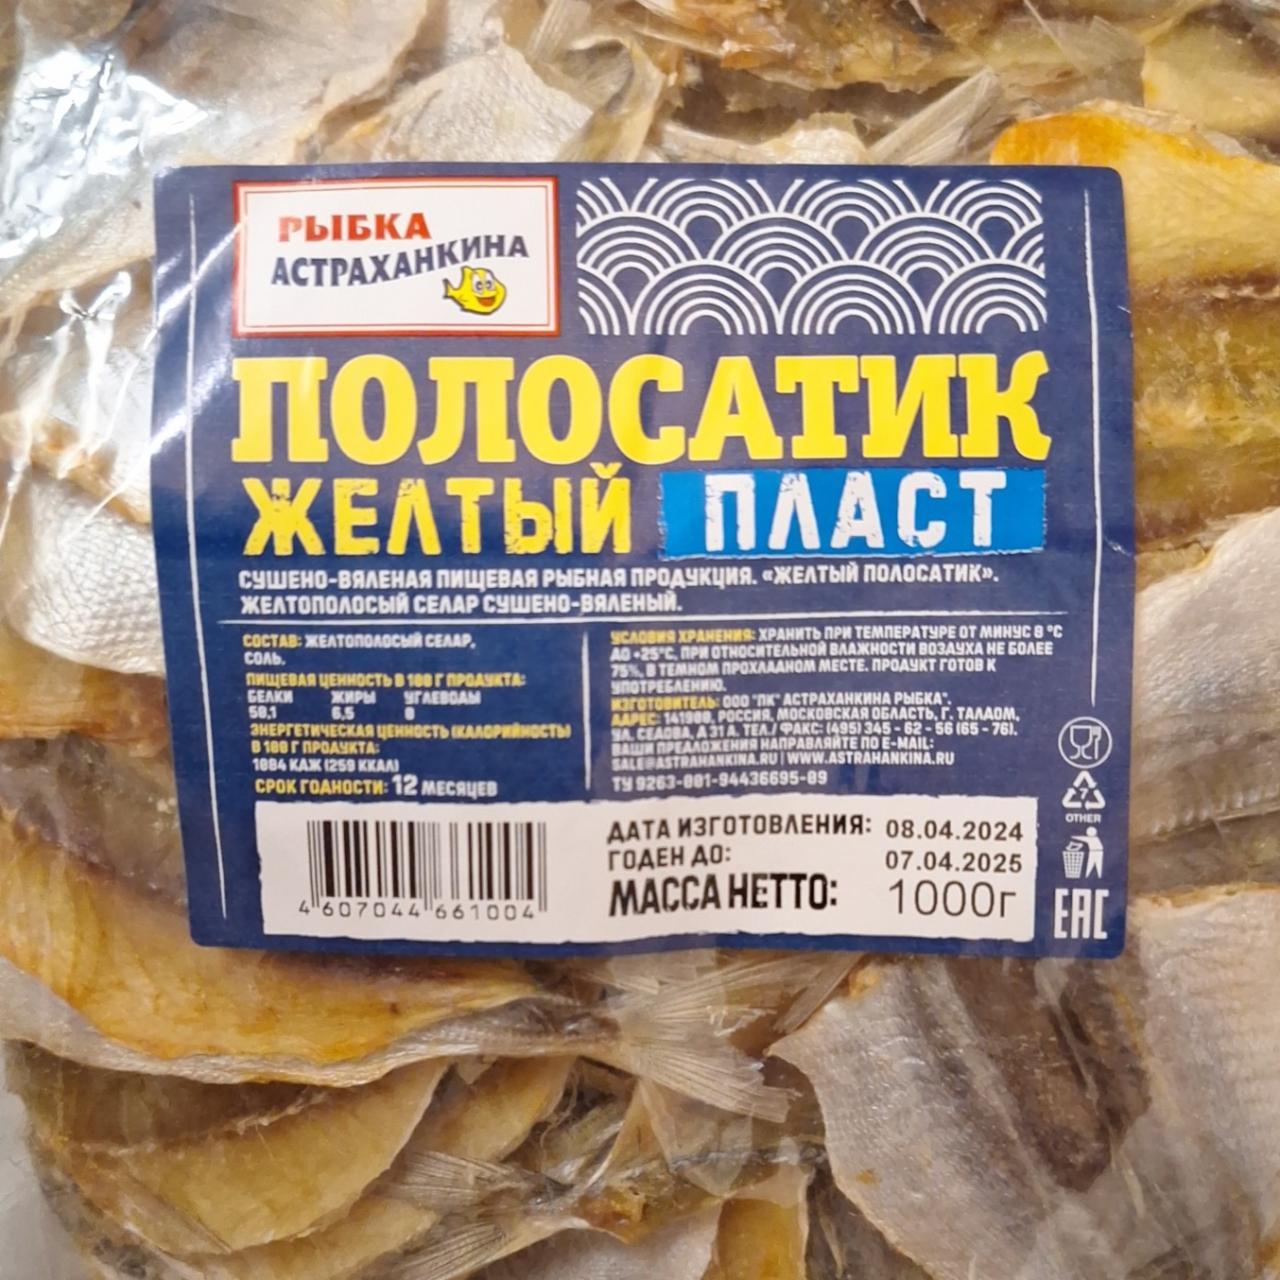 Фото - Желтый полосатик Пласт Астраханкина рыбка